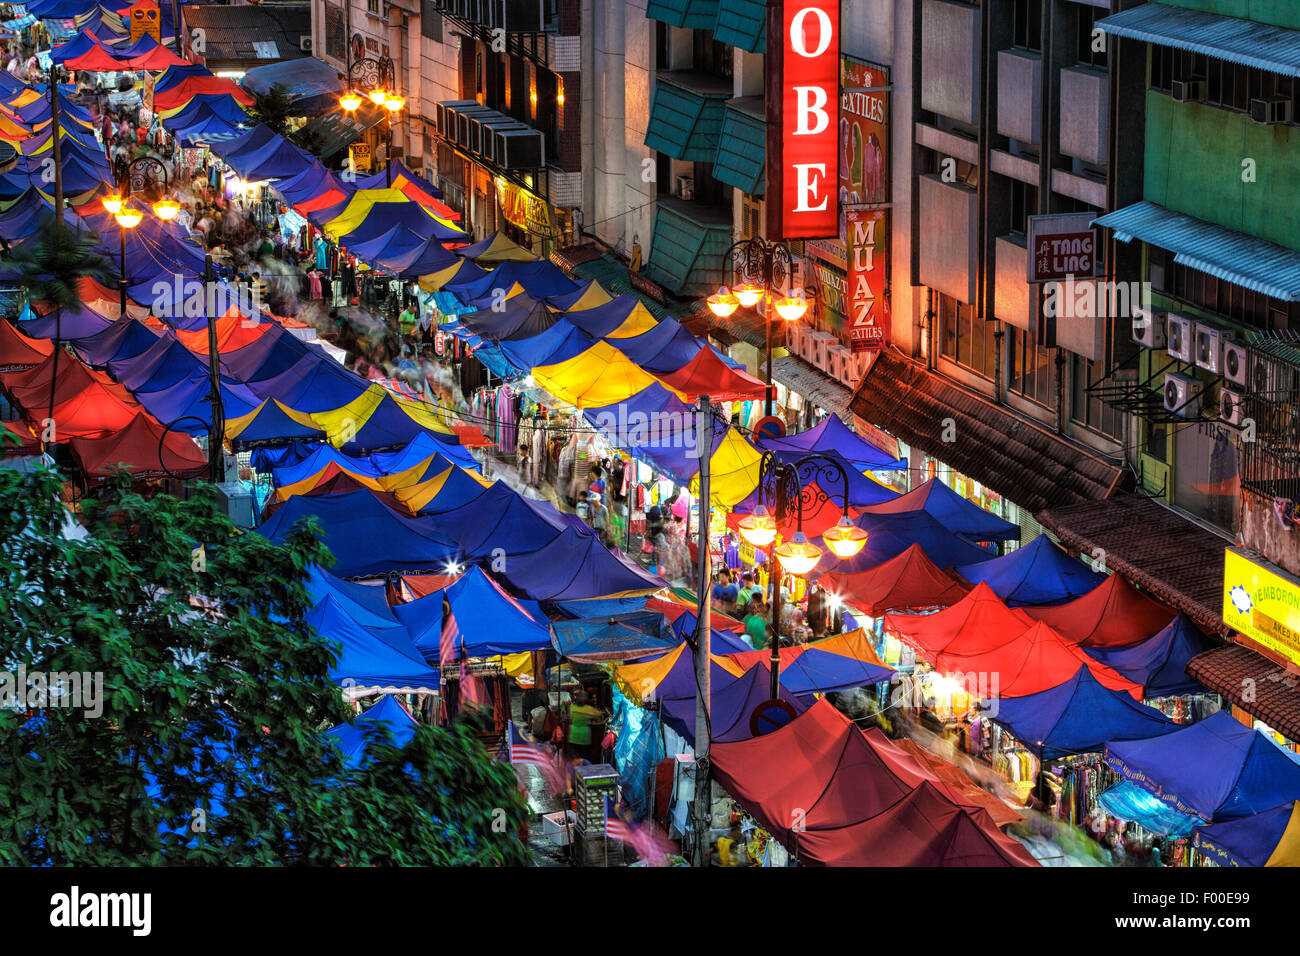 Der Nachtmarkt von Kuala Lumpur im Laufe des Monats Ramadan. Stockfoto